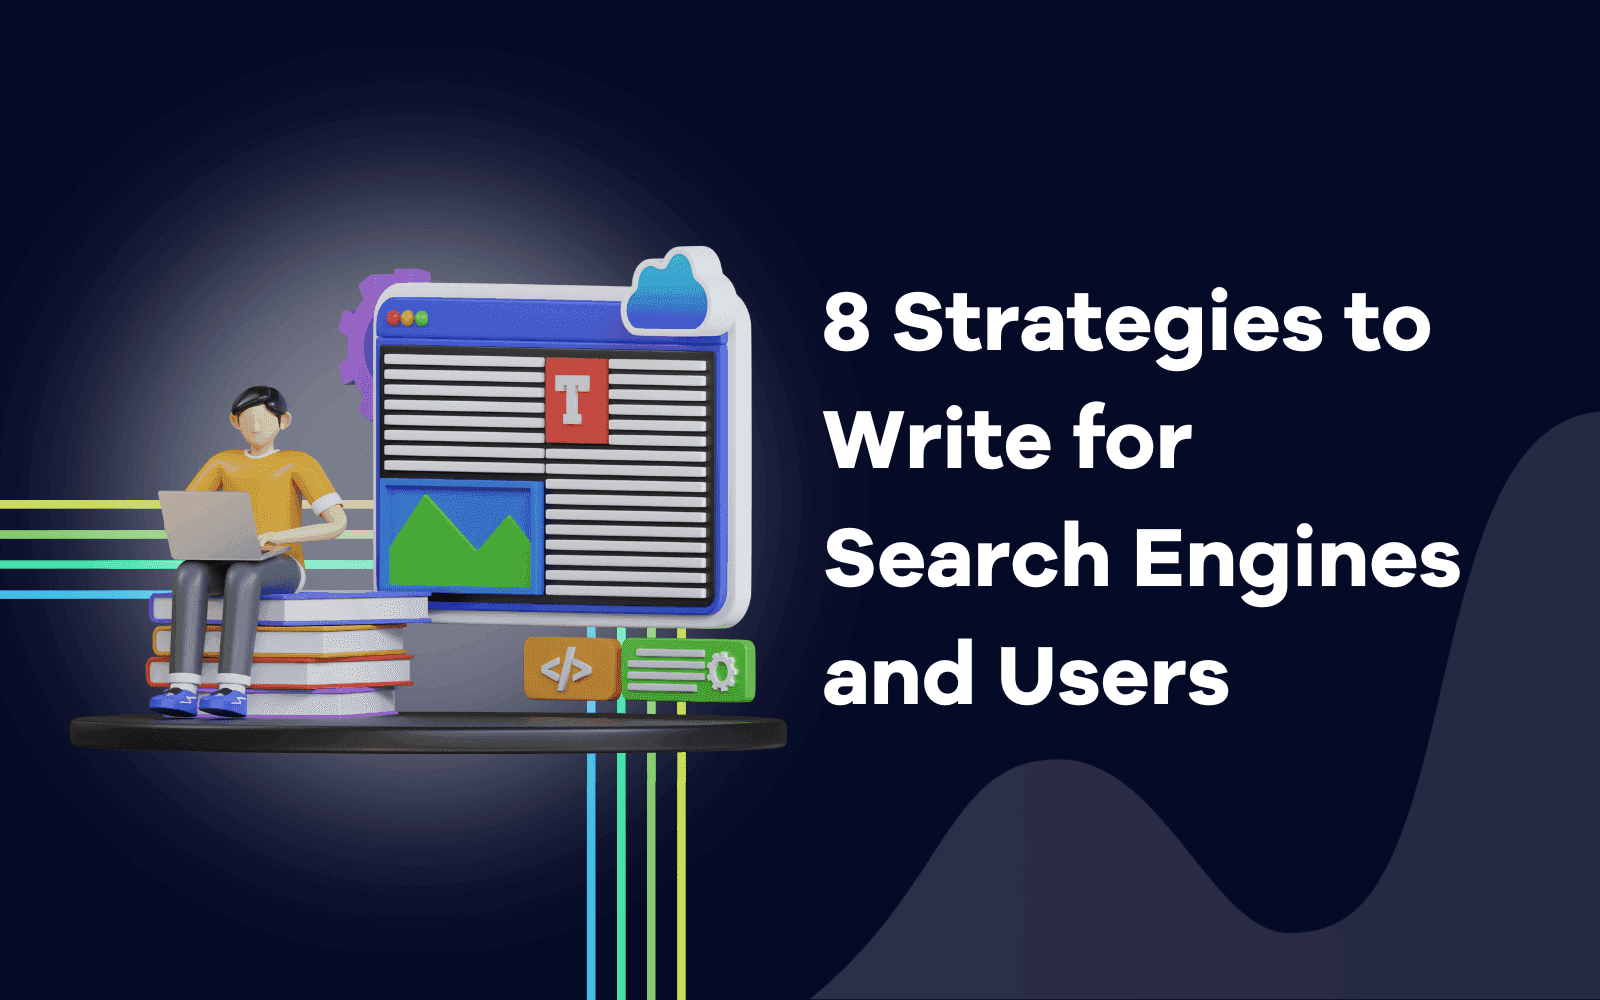 SEO 카피라이팅: 검색 엔진과 사용자를 위한 8가지 글쓰기 전략